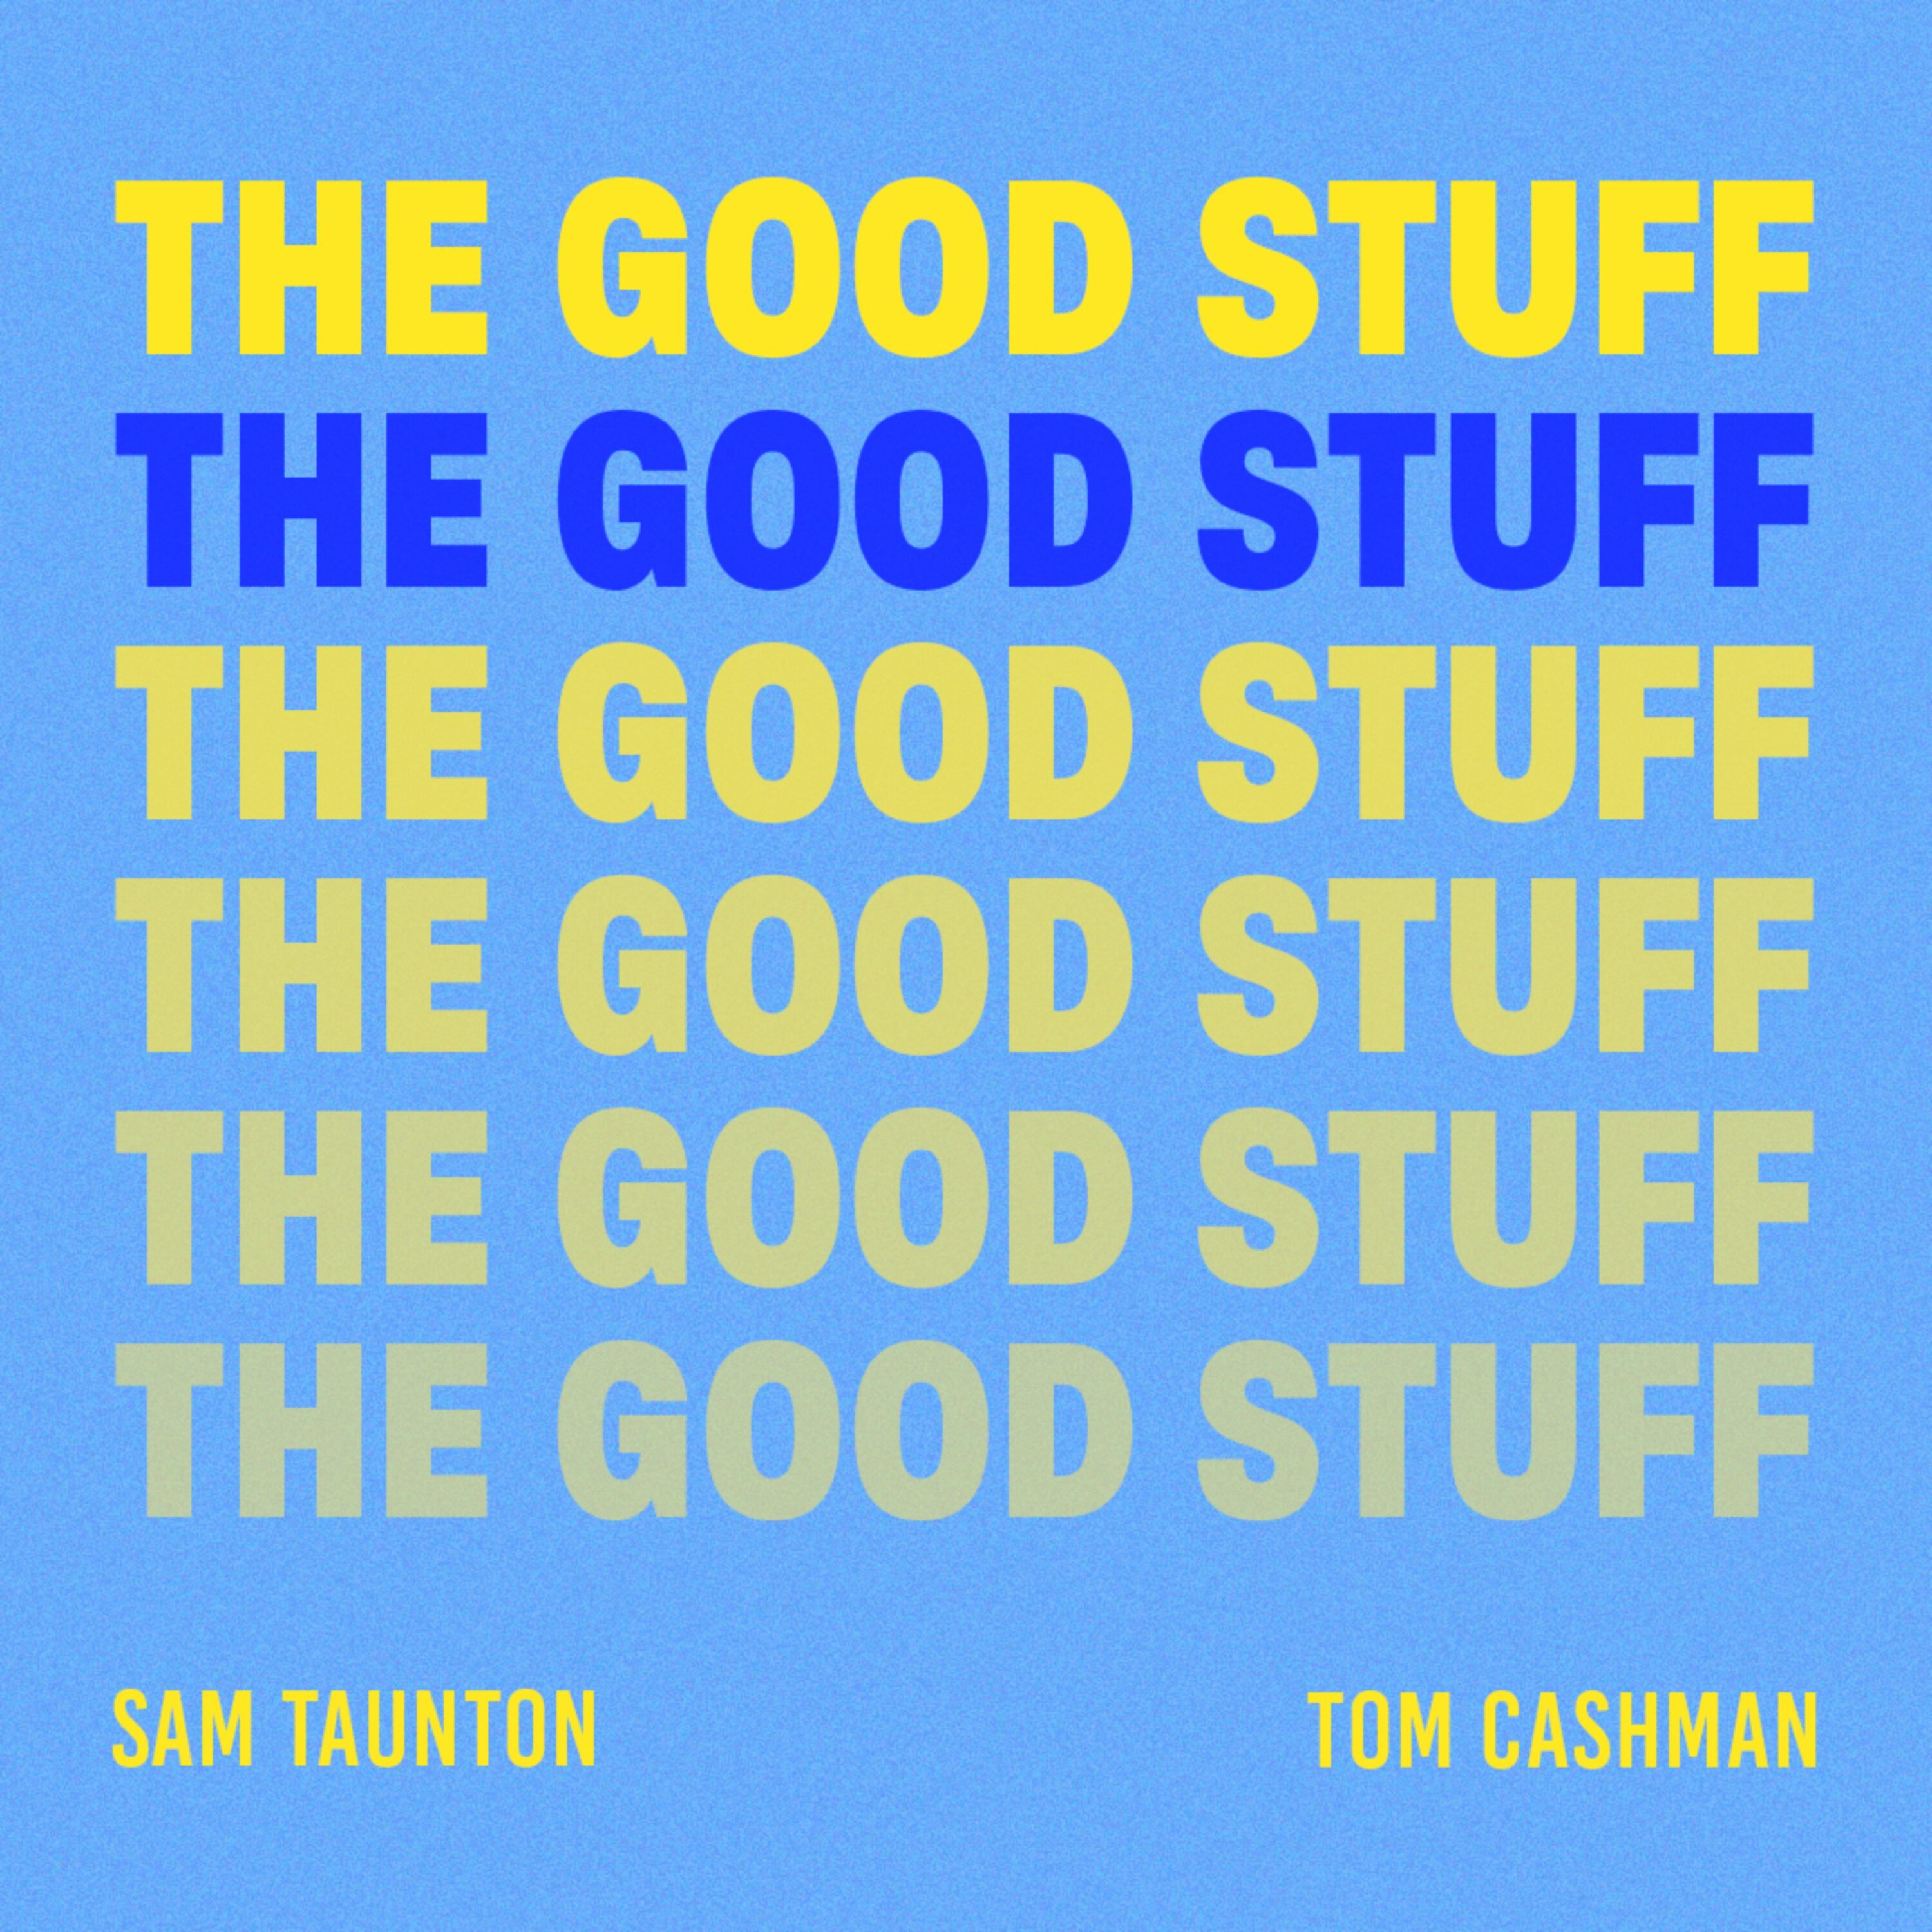 The Good Stuff - Episode 5 Feat. Cameron James